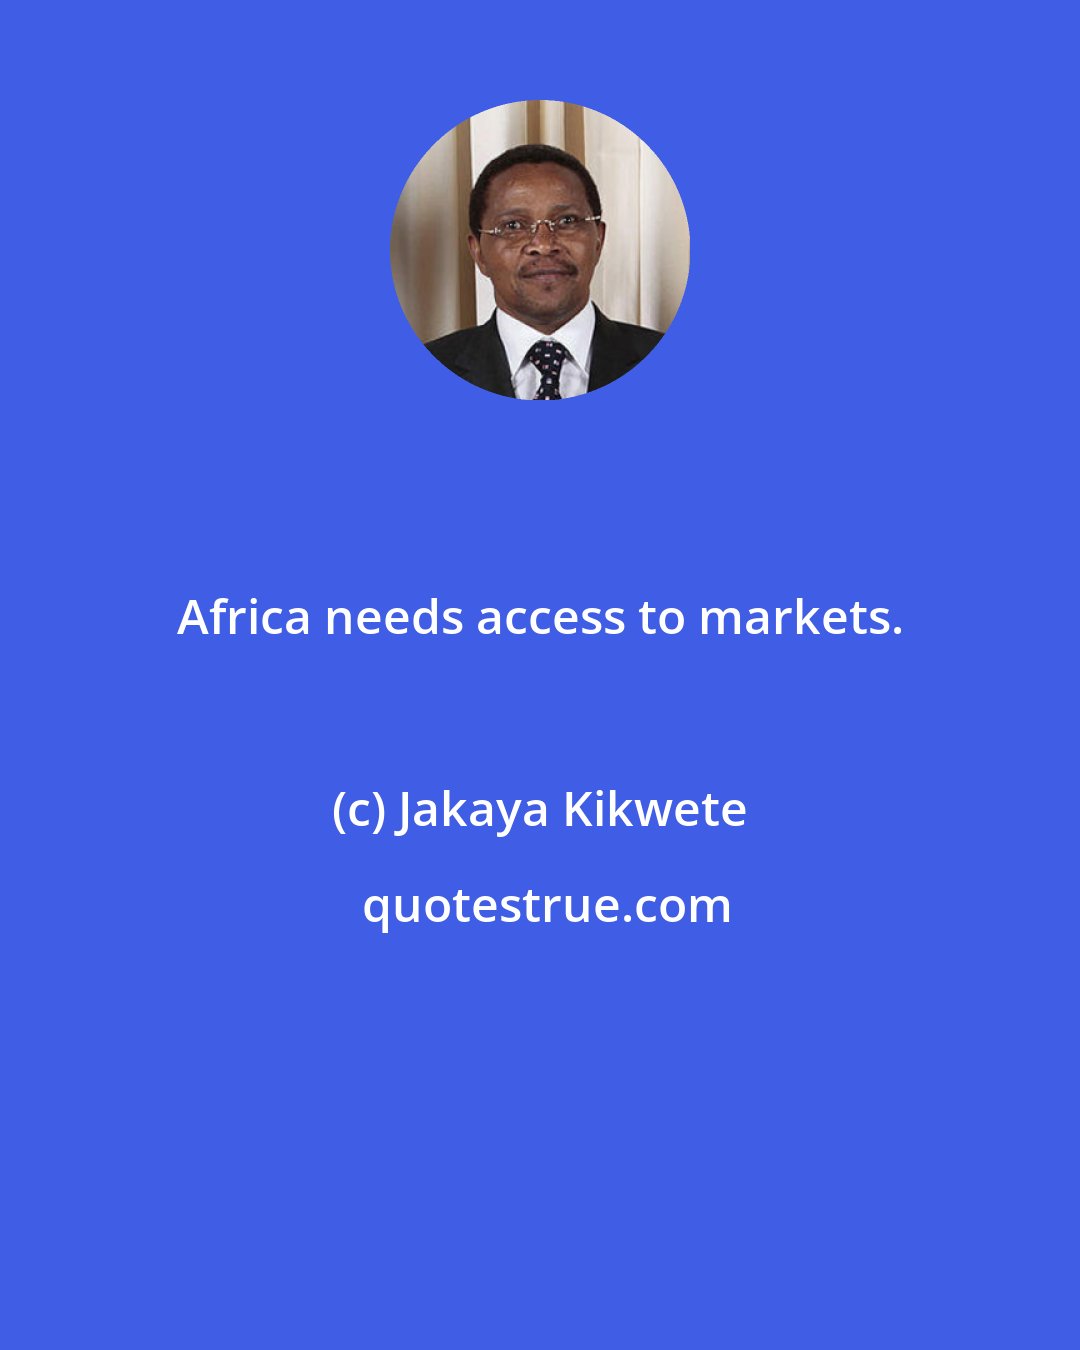 Jakaya Kikwete: Africa needs access to markets.